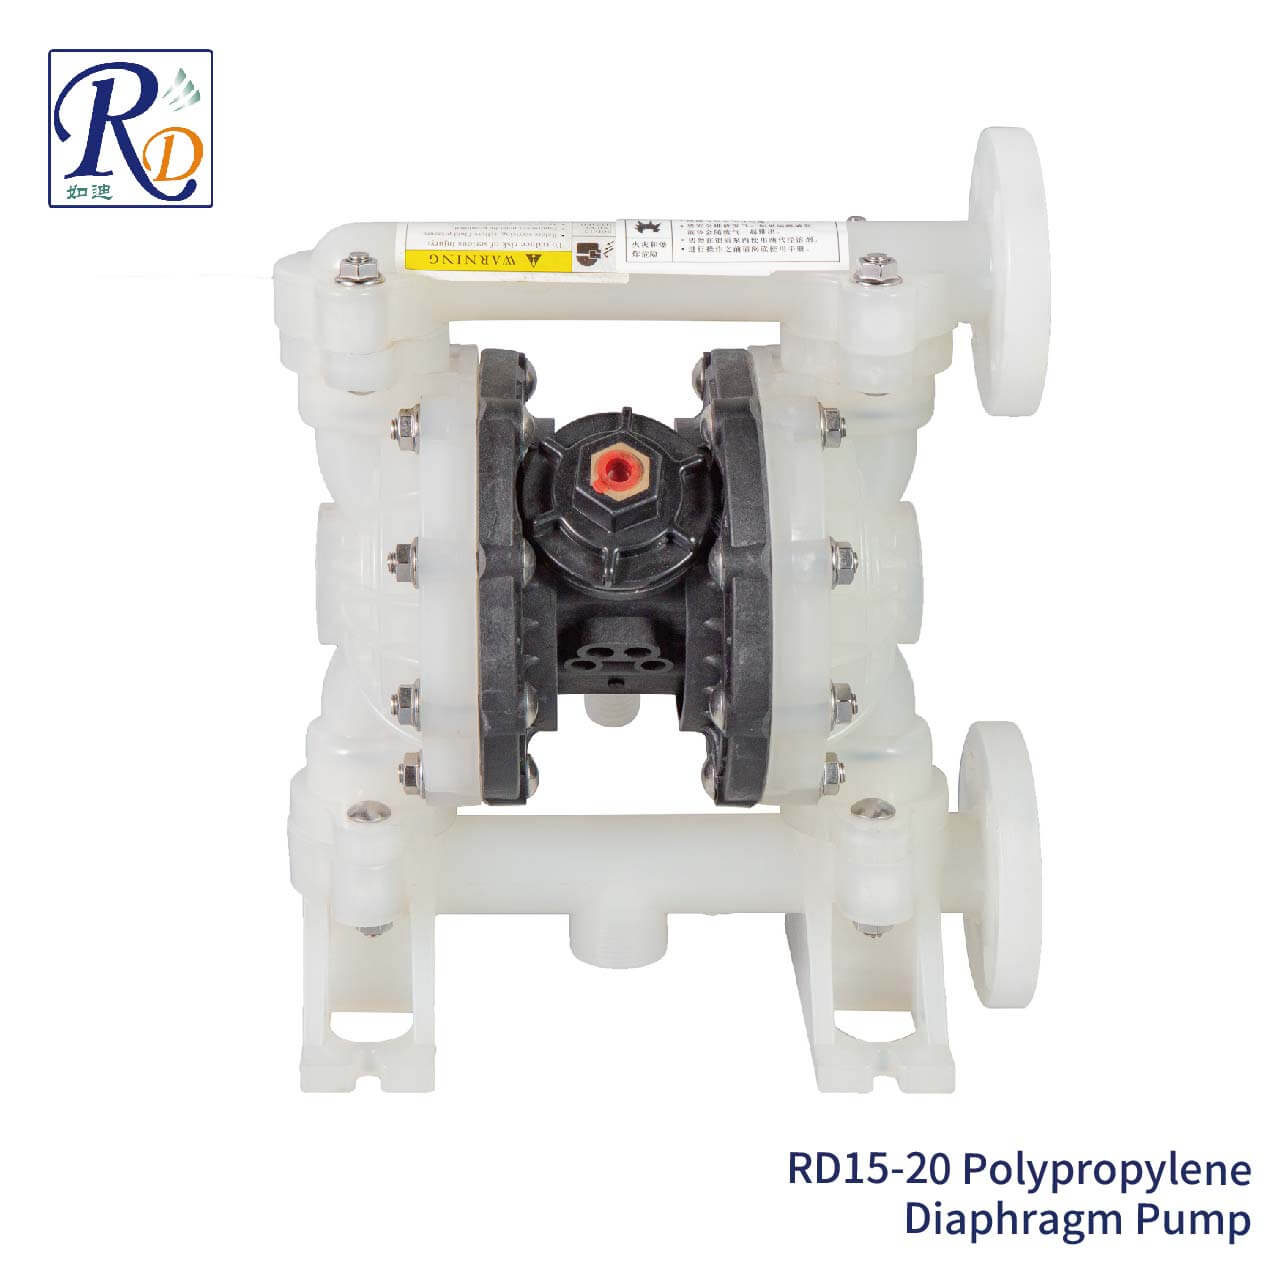 RD15-20 Polypropylene Diaphragm Pump